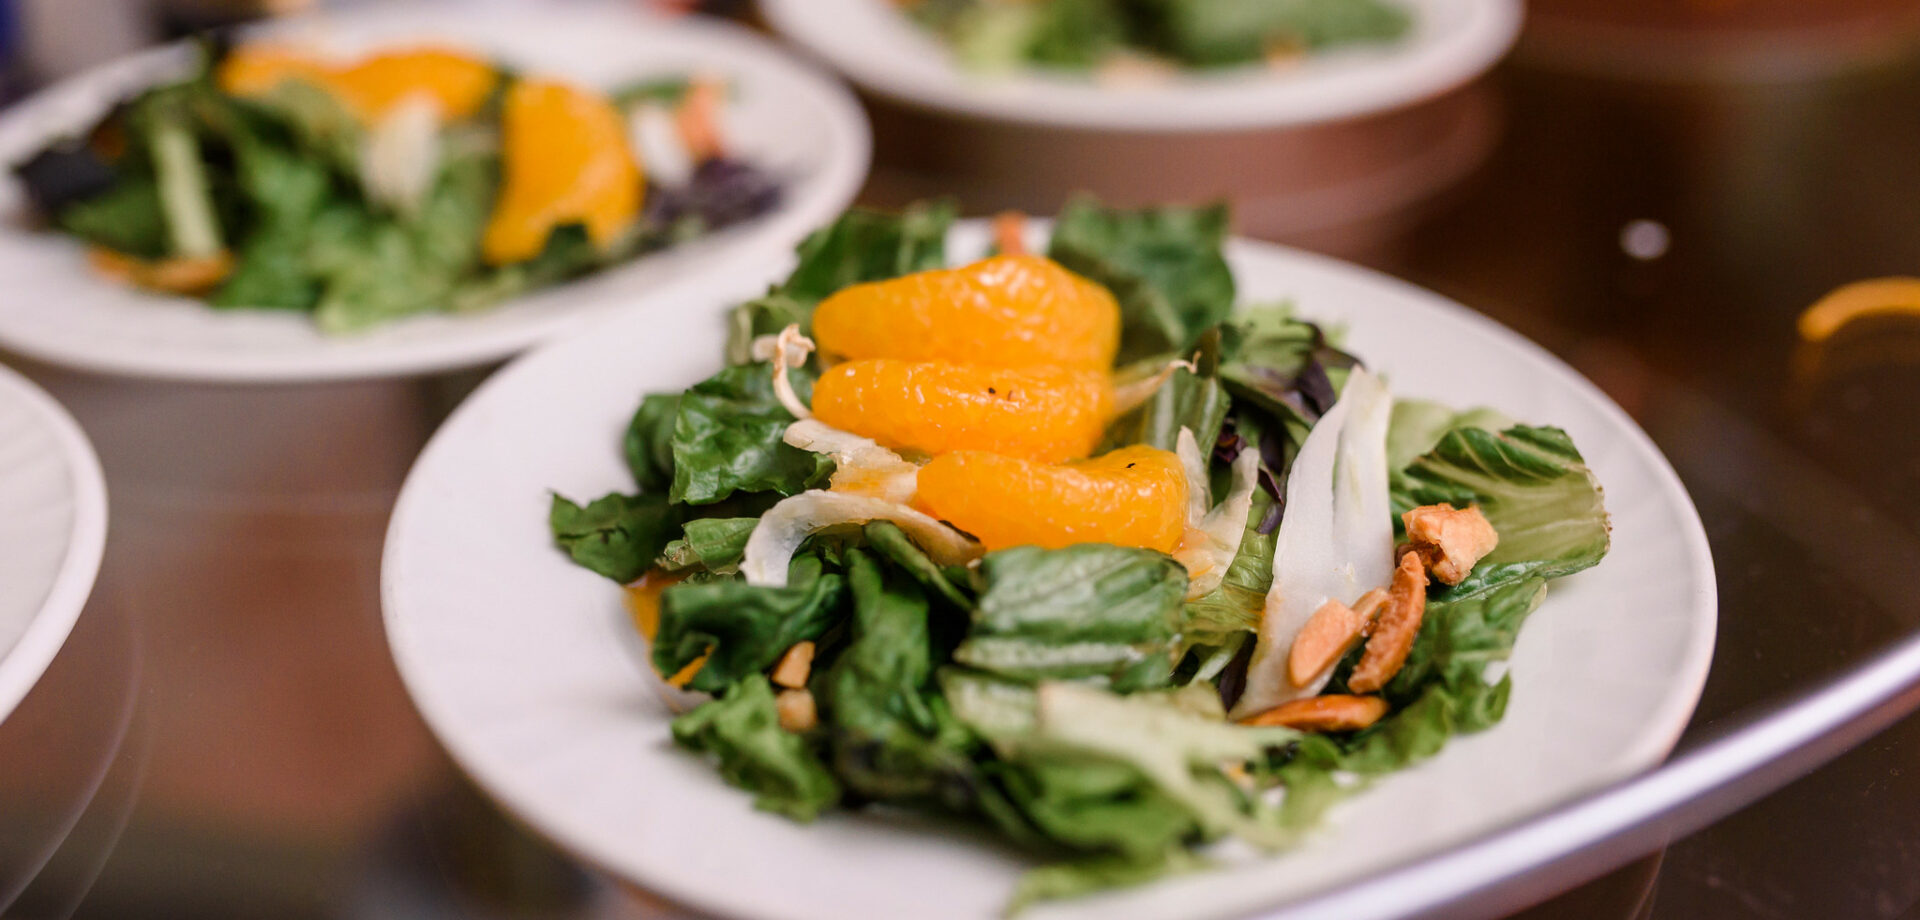 Plated summer mandarin orange salads